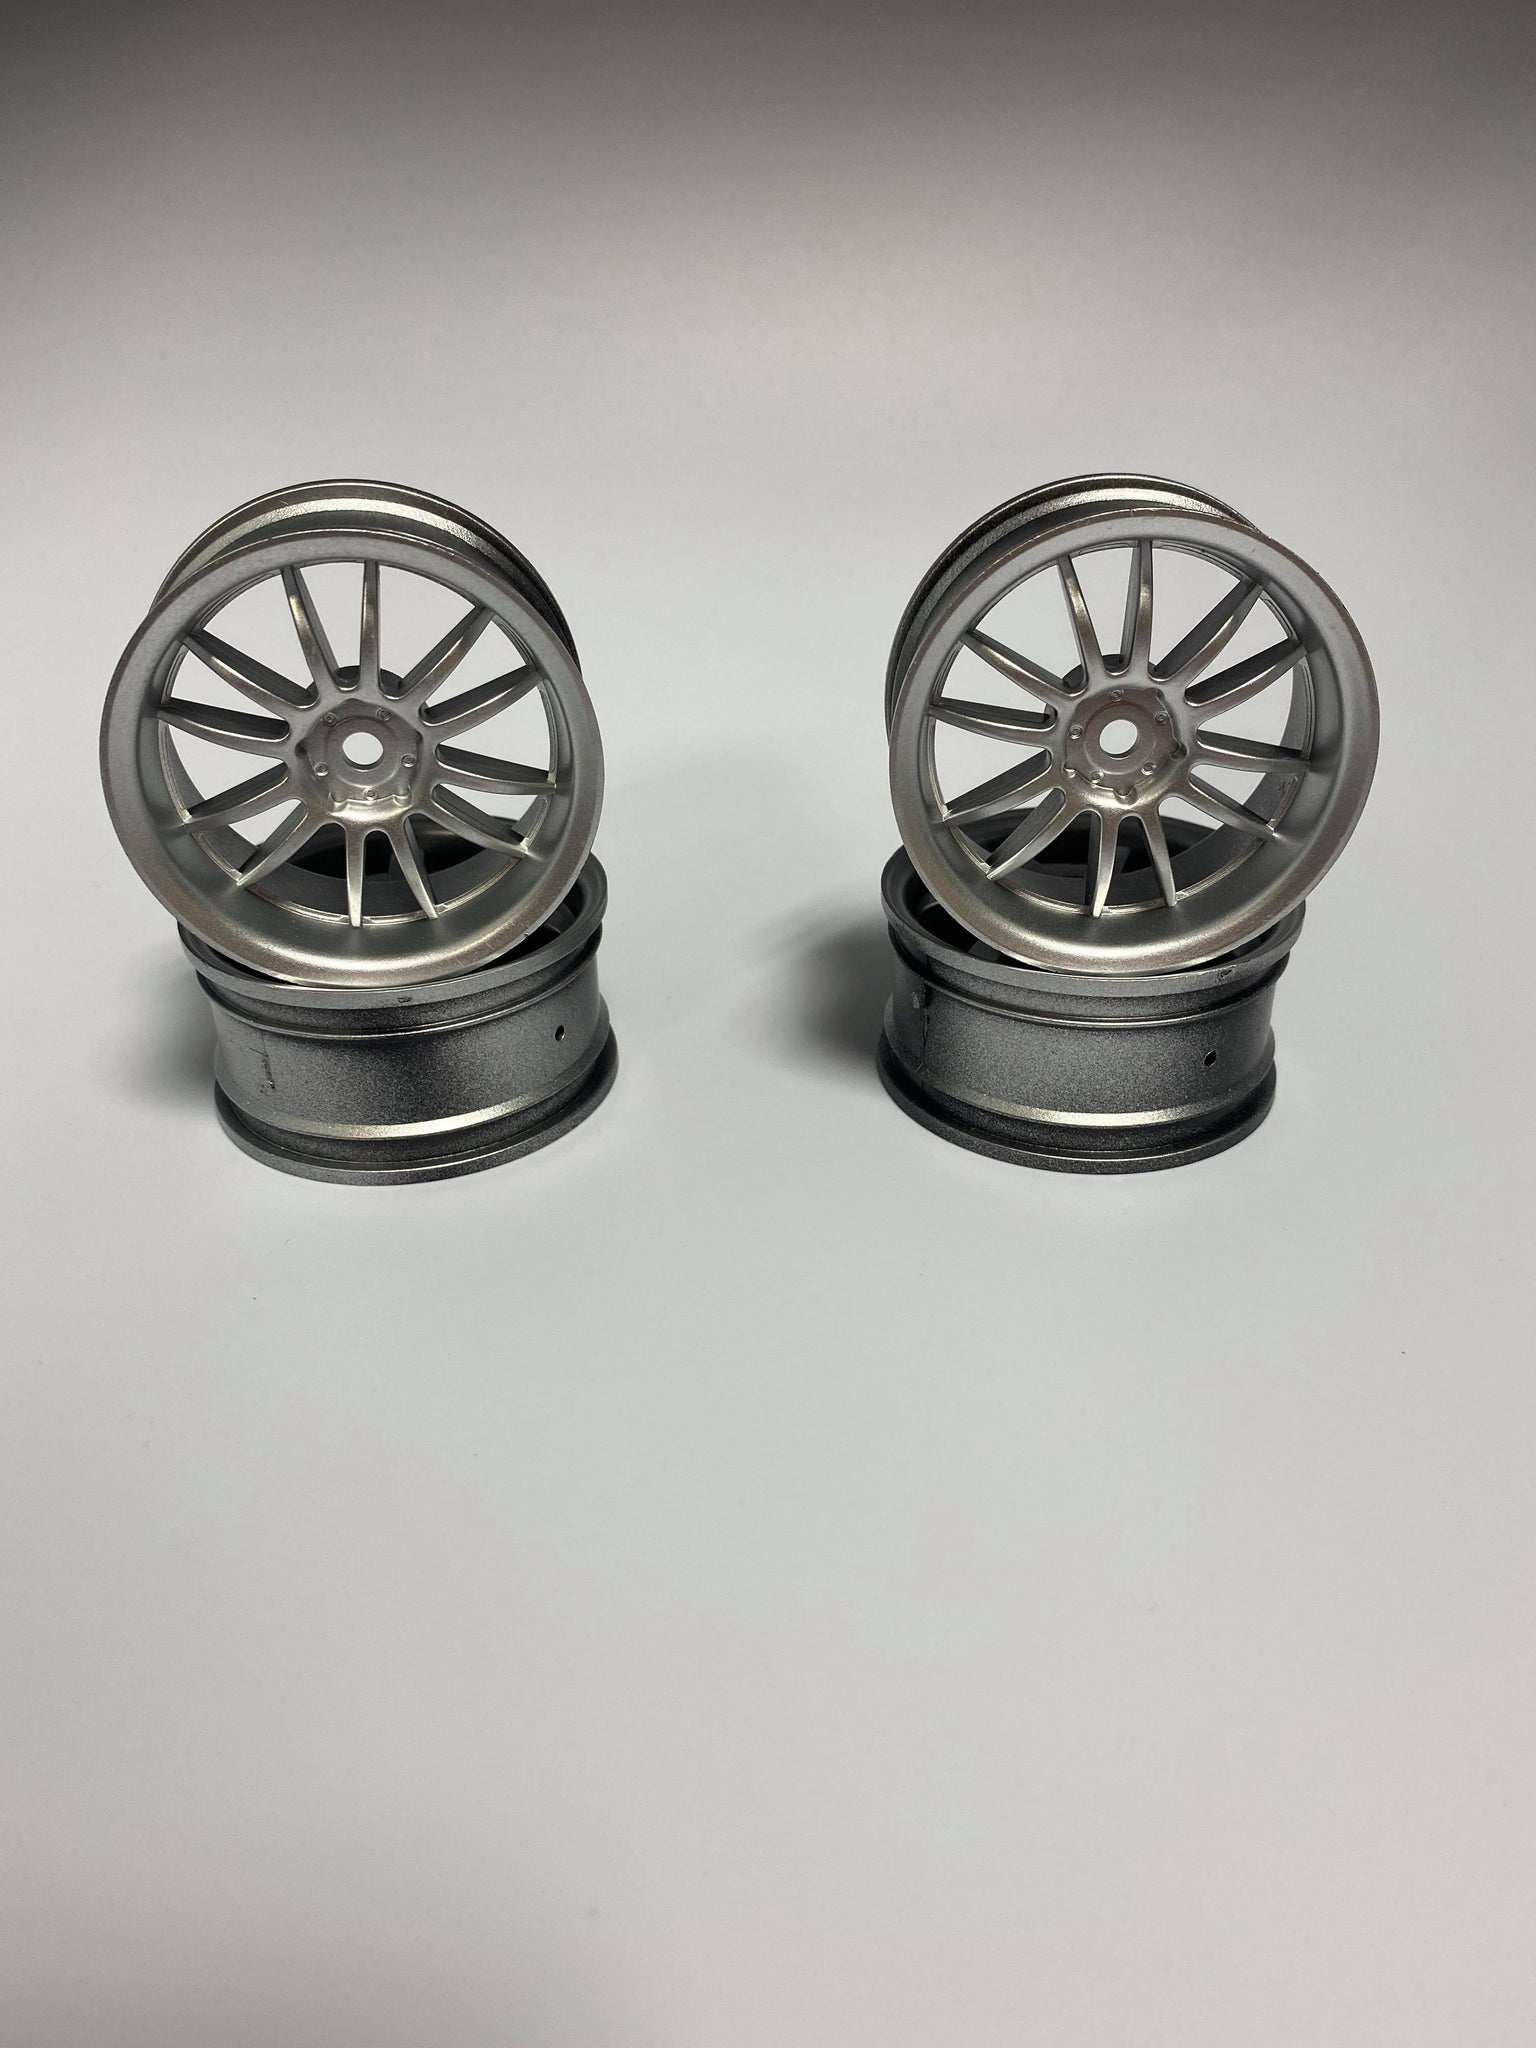 26mm 6mm offset silver spoke wheels 12mm hex (4pcs)